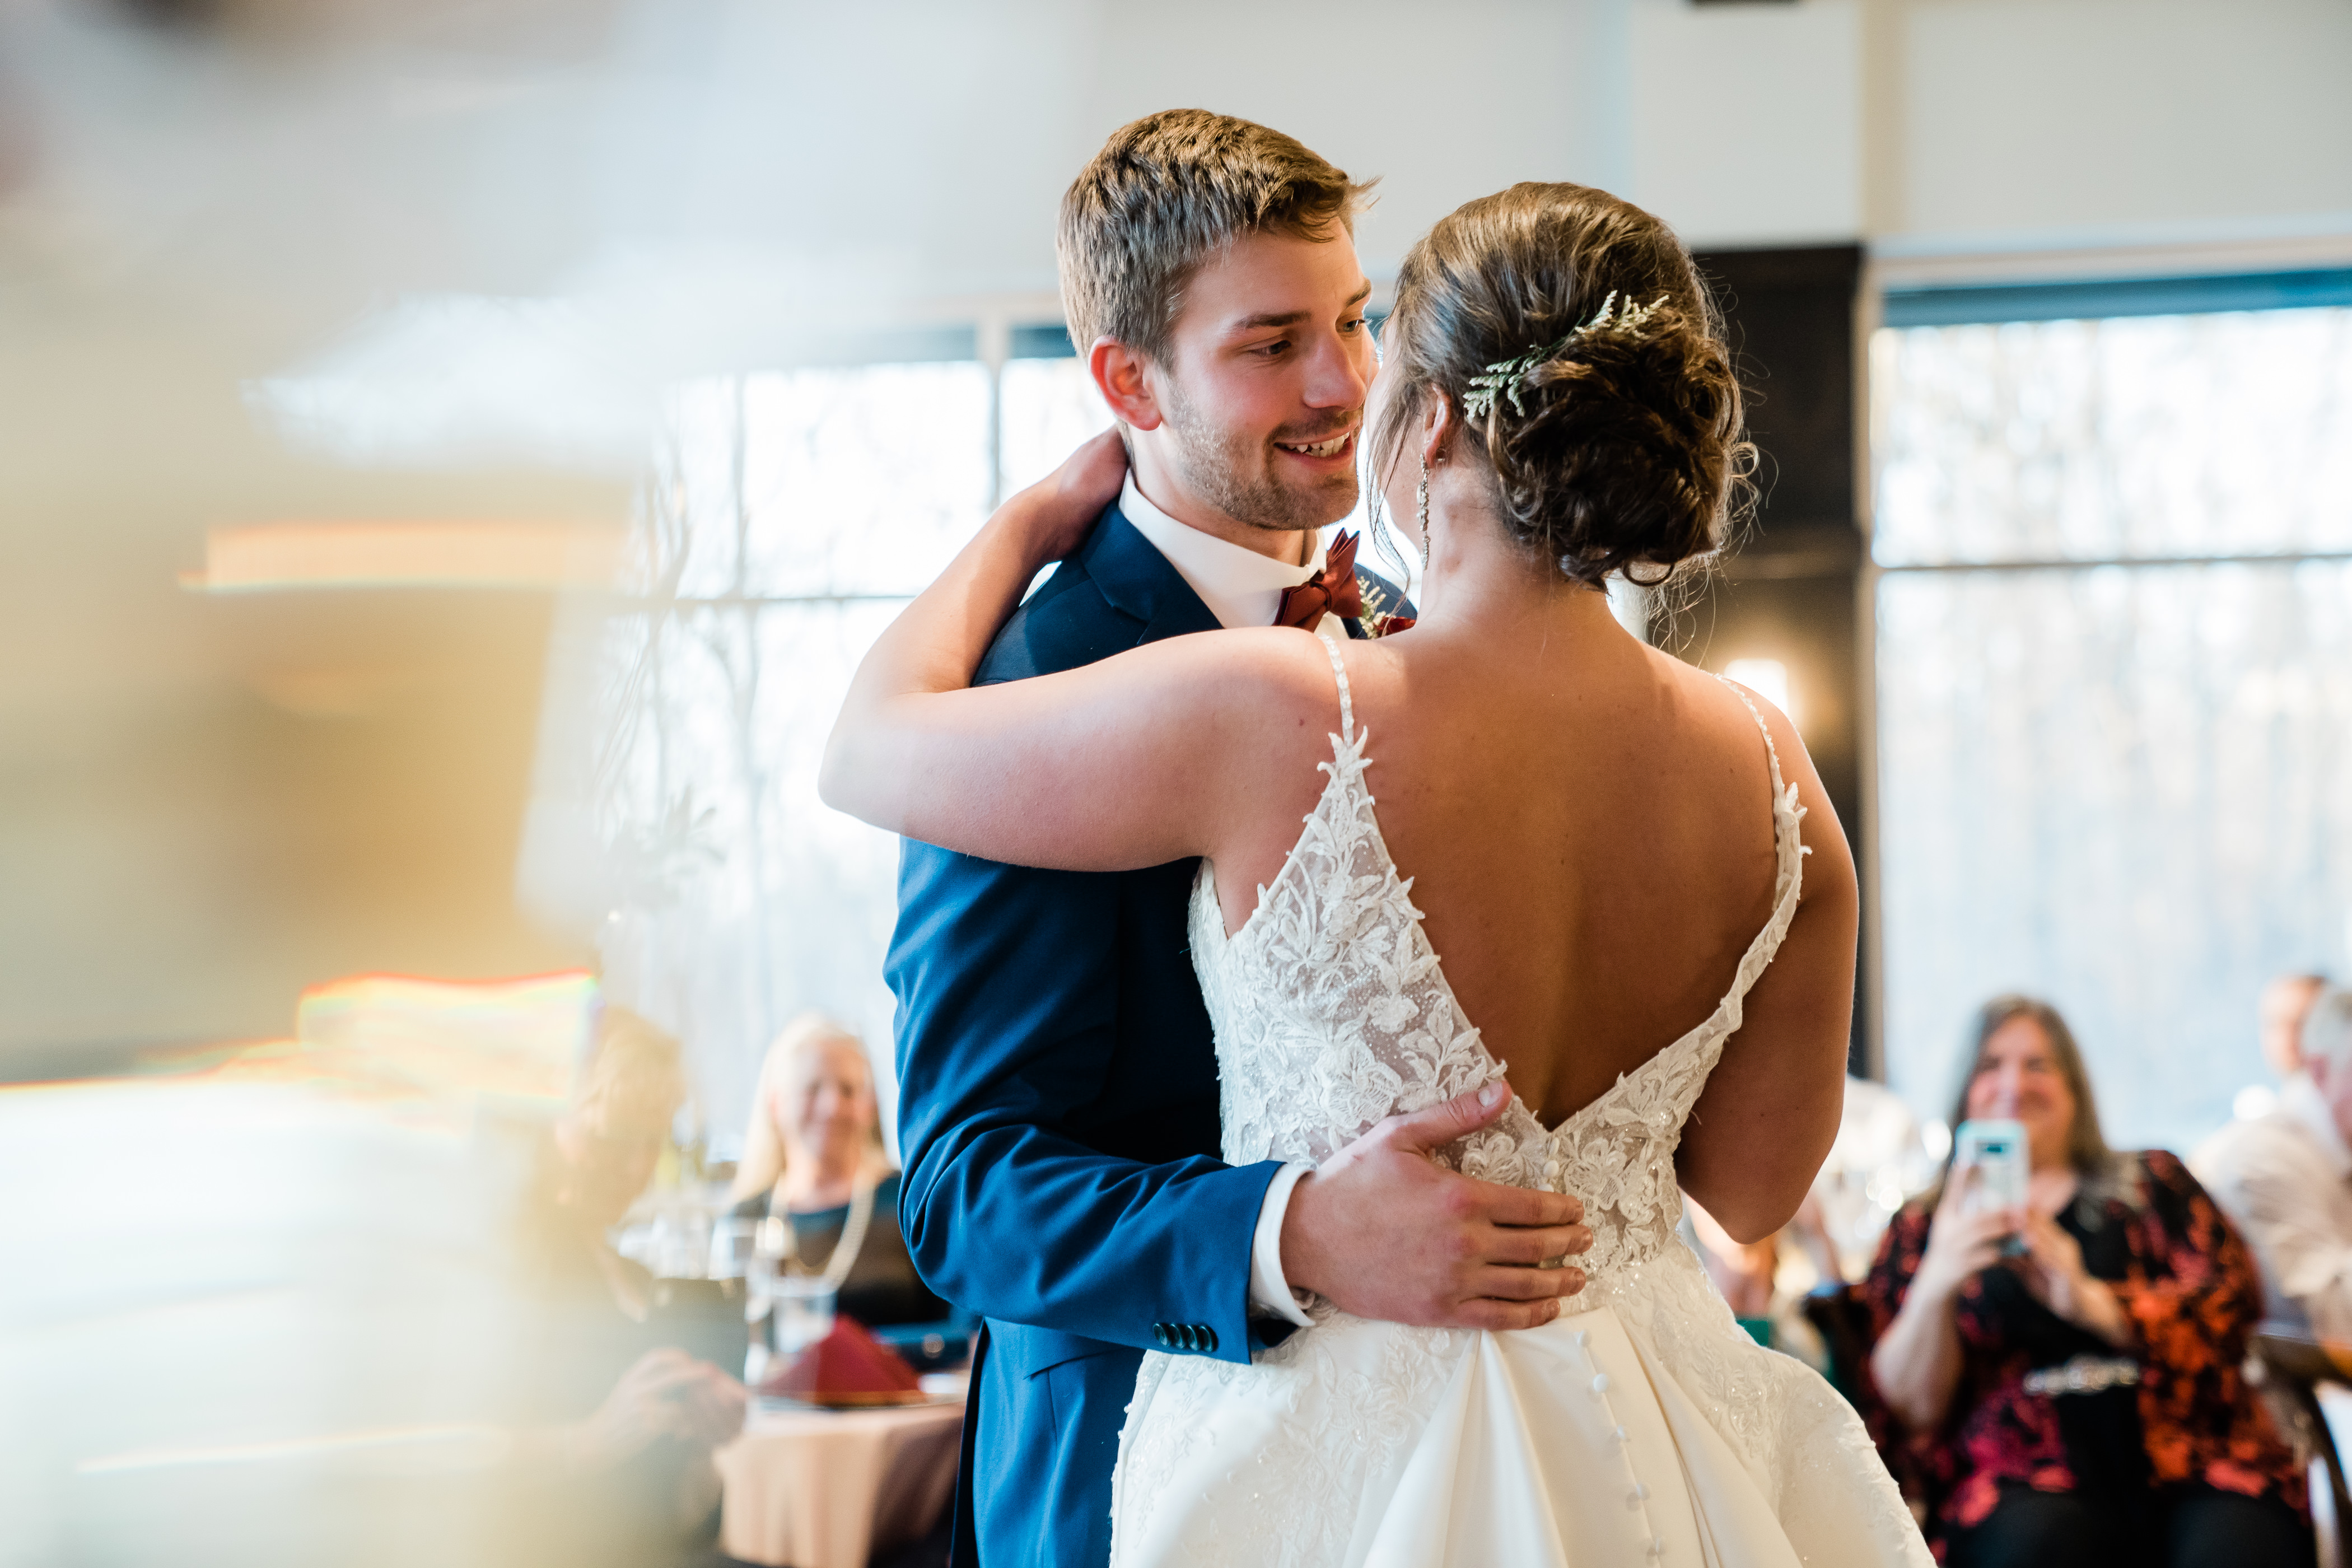 Fort Wayne wedding photographers capture bride and groom dancing together